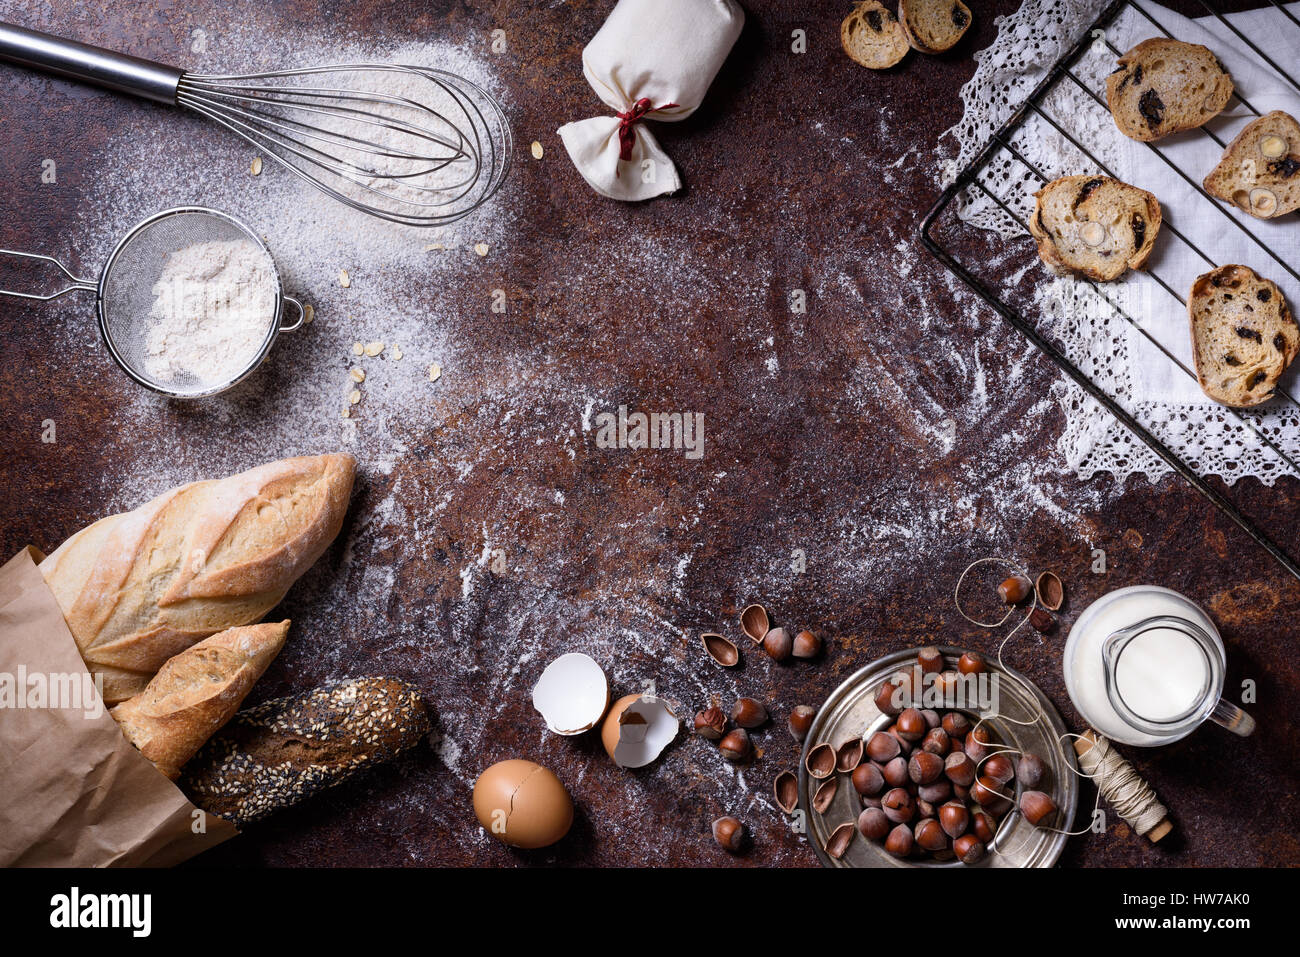 https://c8.alamy.com/comp/HW7AK0/bakery-background-baking-ingredients-over-rustic-kitchen-countertop-HW7AK0.jpg